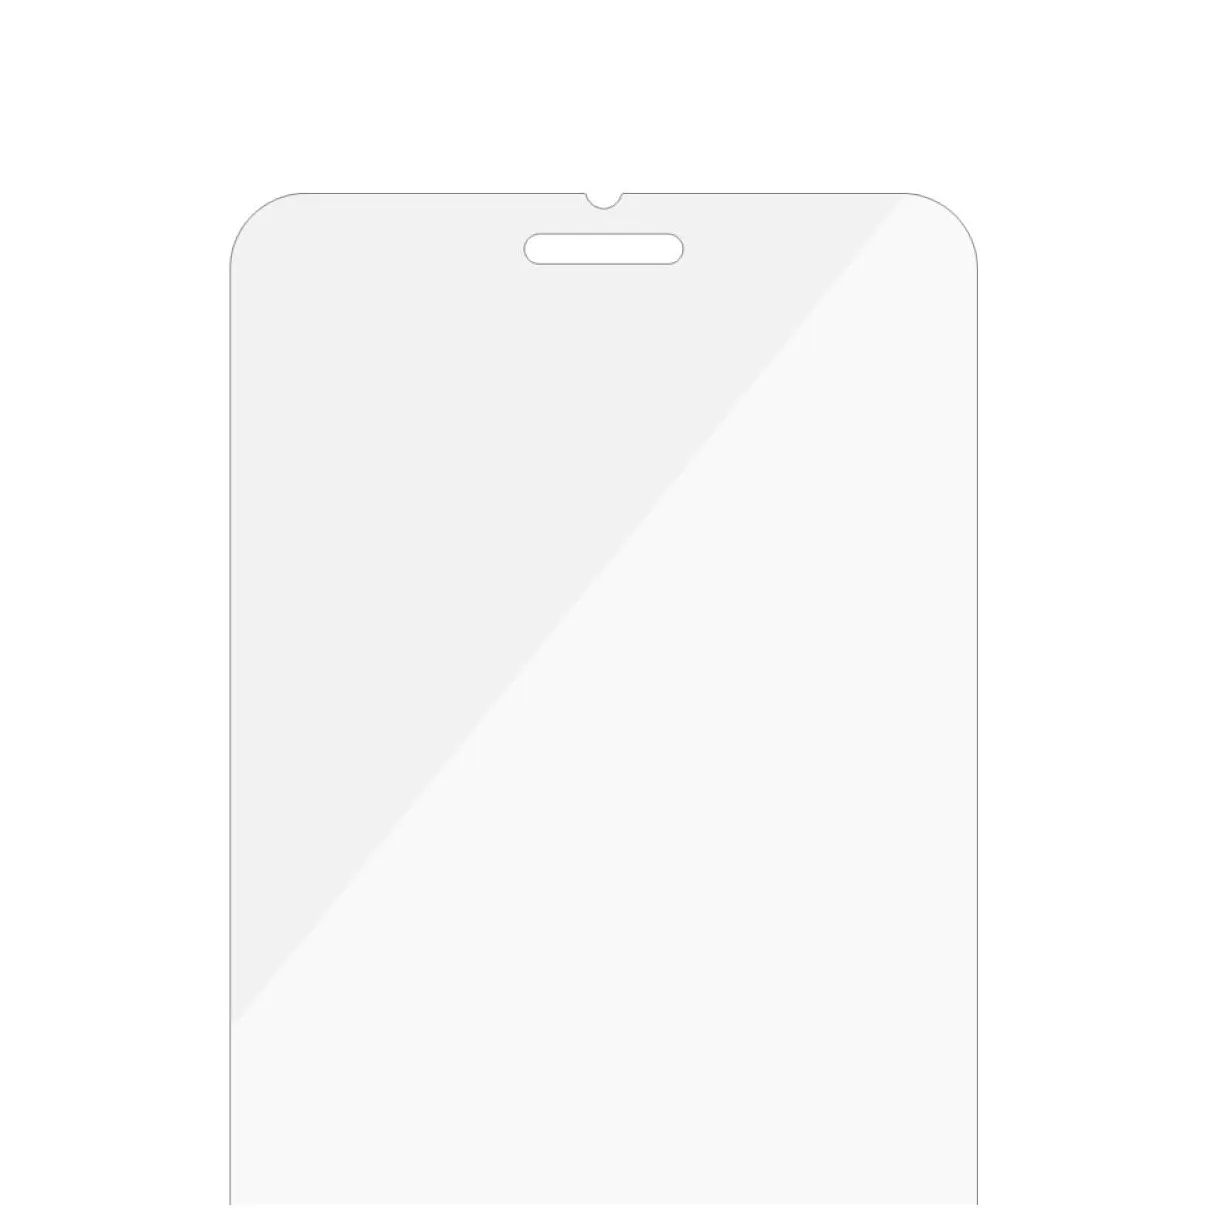 PanzerGlass Apple iPhone 6/6s/7/8/SE (2020) Transparant